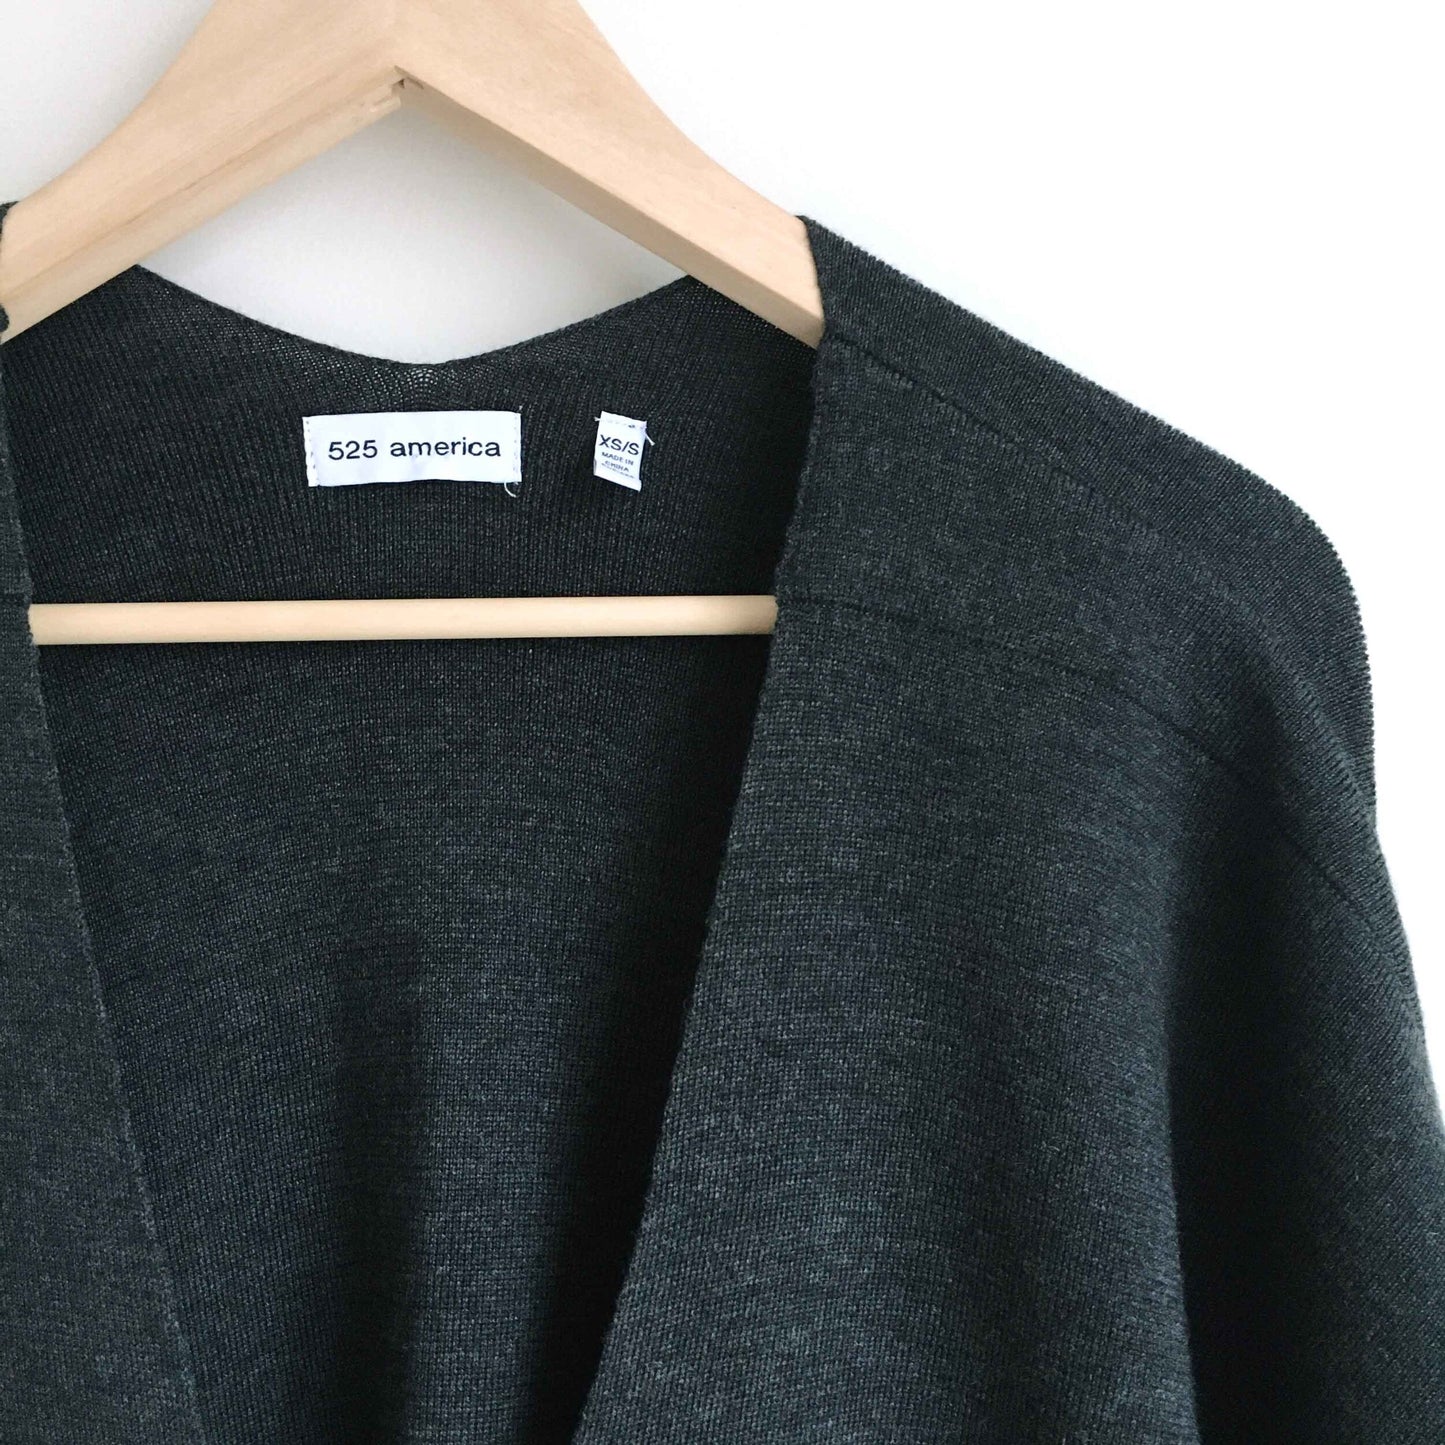 525 America Merino Wool v-neck pullover - size xs/s